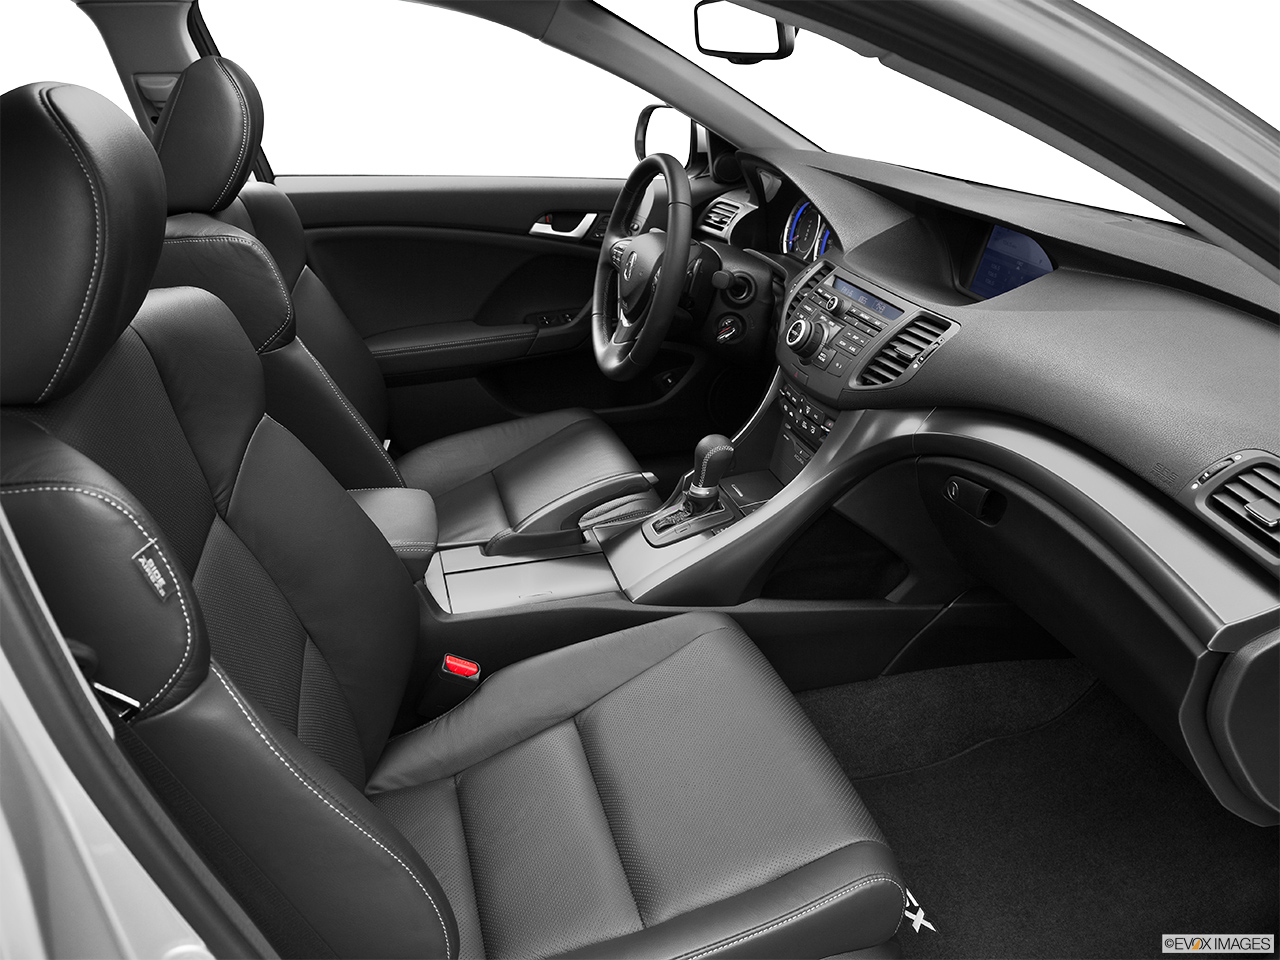 2013 Acura TSX 5-Speed Automatic Passenger seat. 